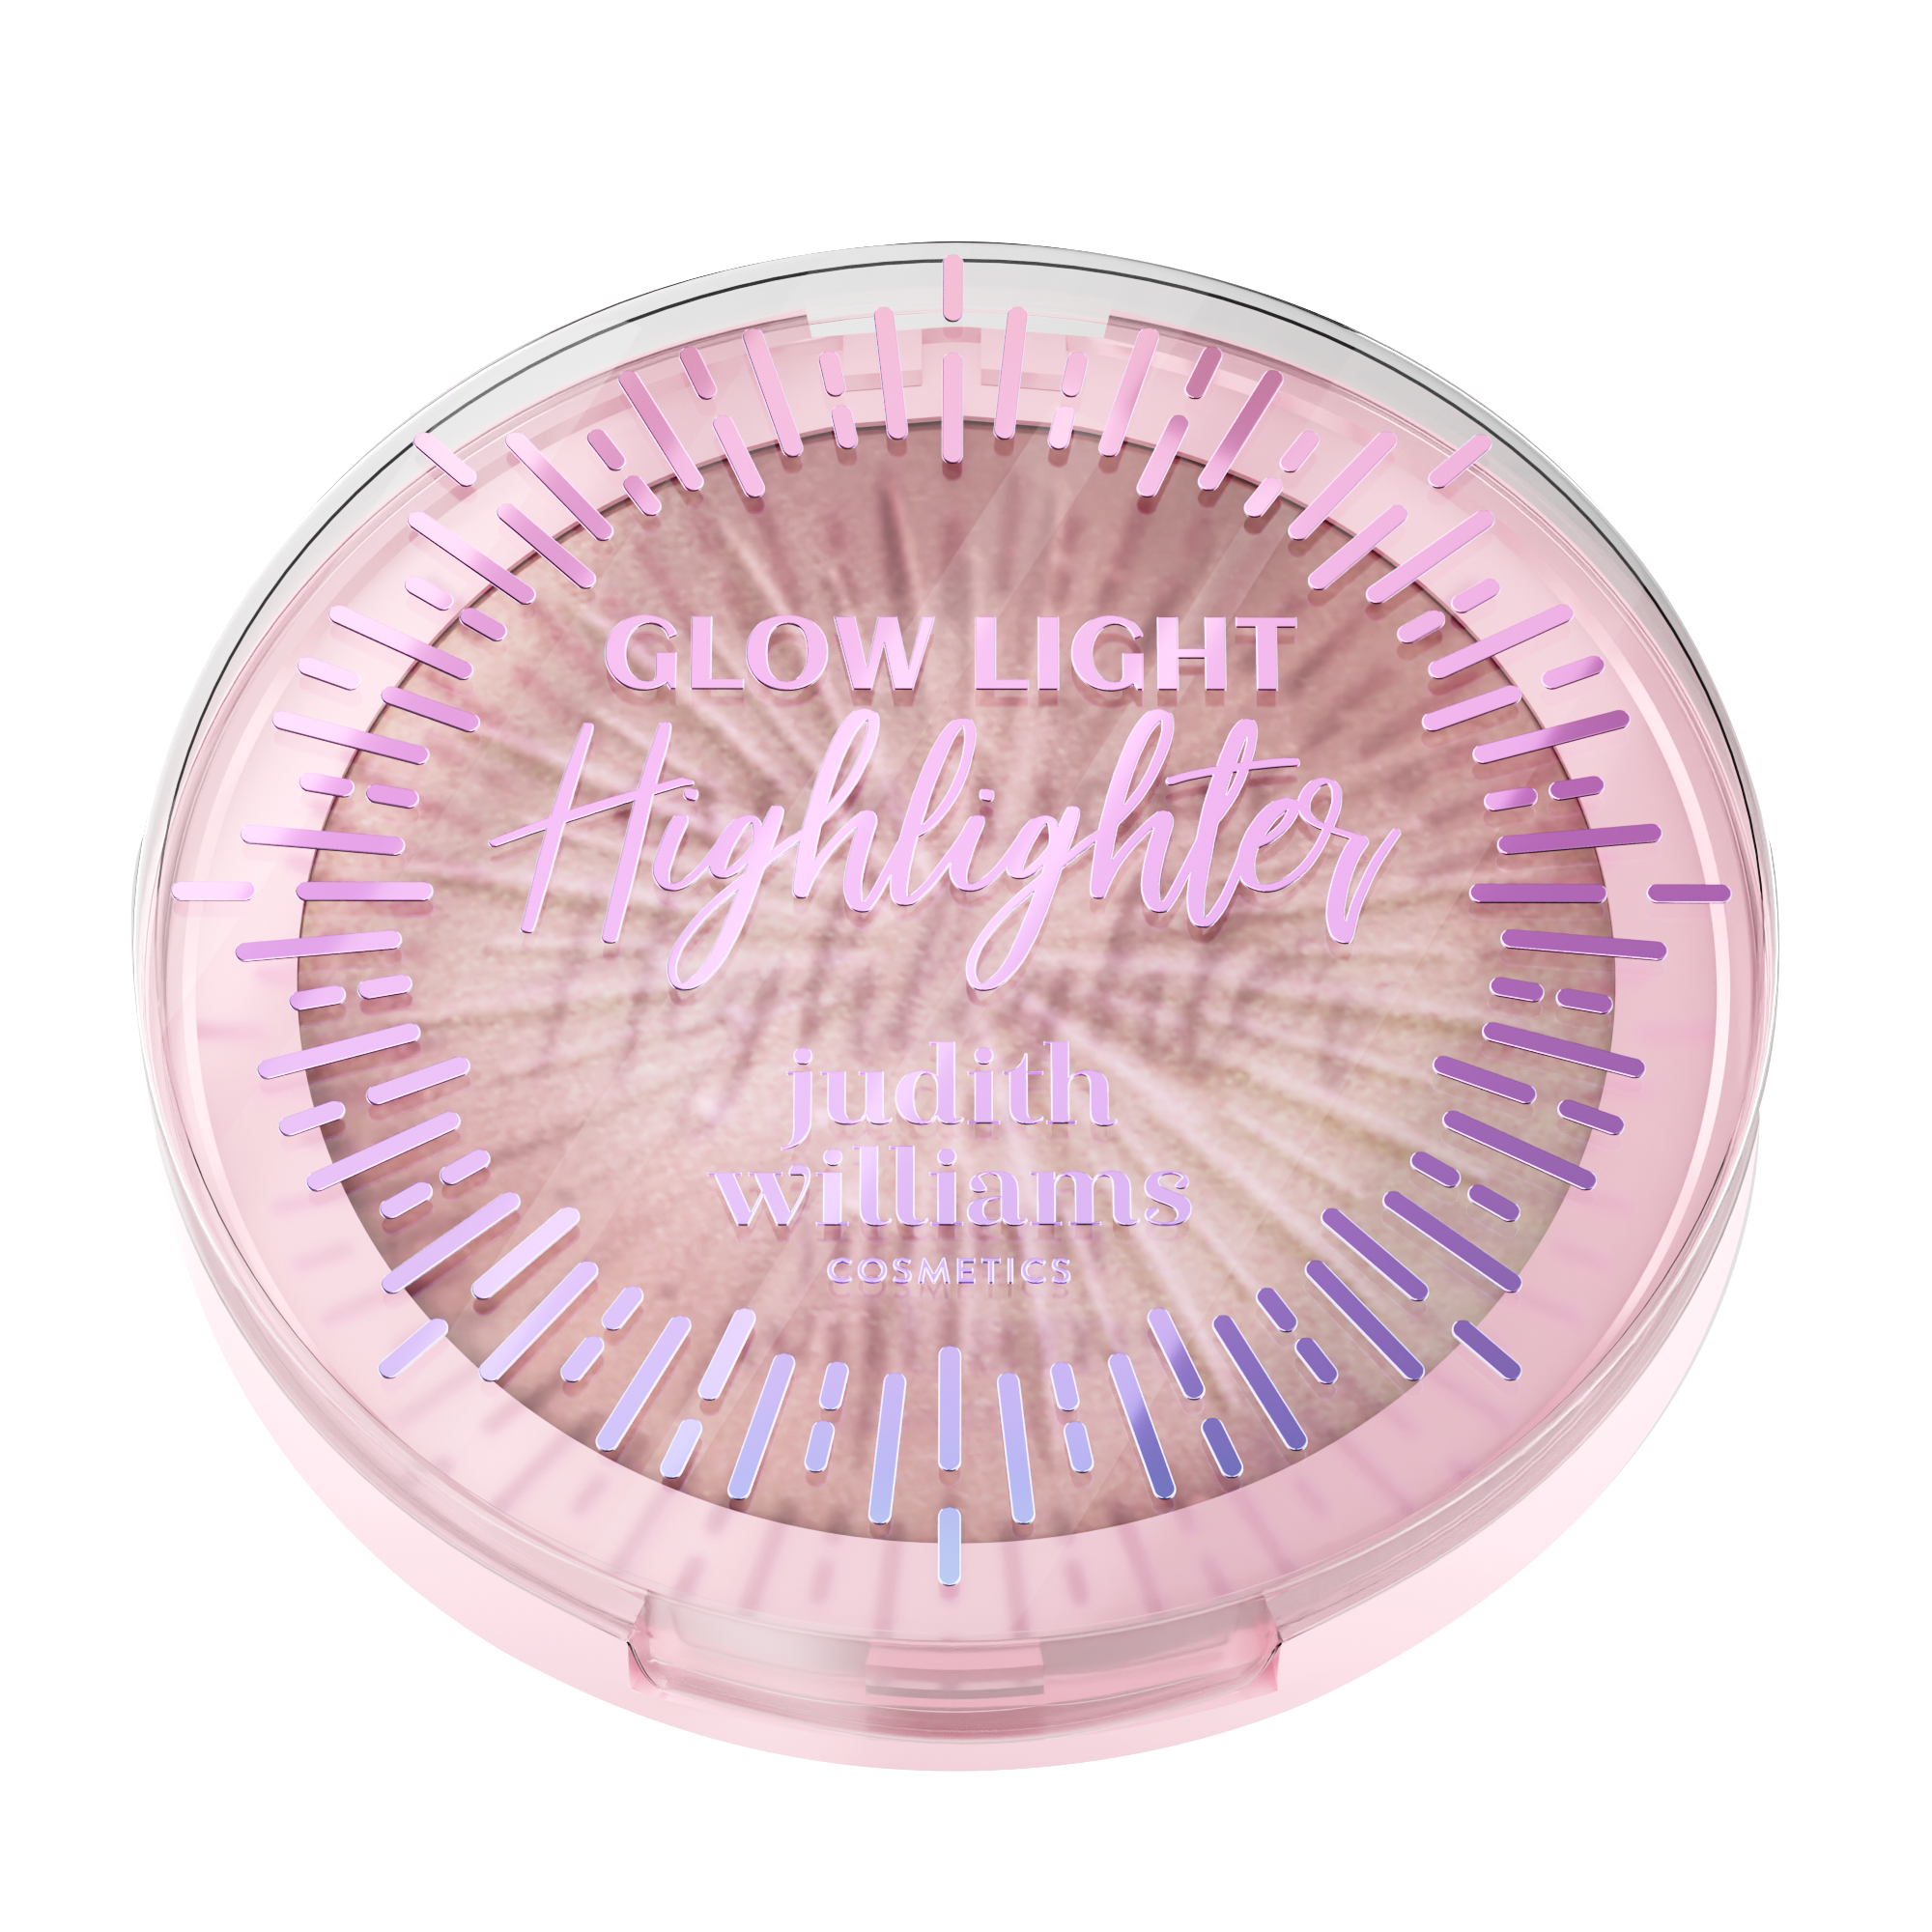 Highlighter | Make-up | Glow Light Highlighter Limited Edition | Judith Williams